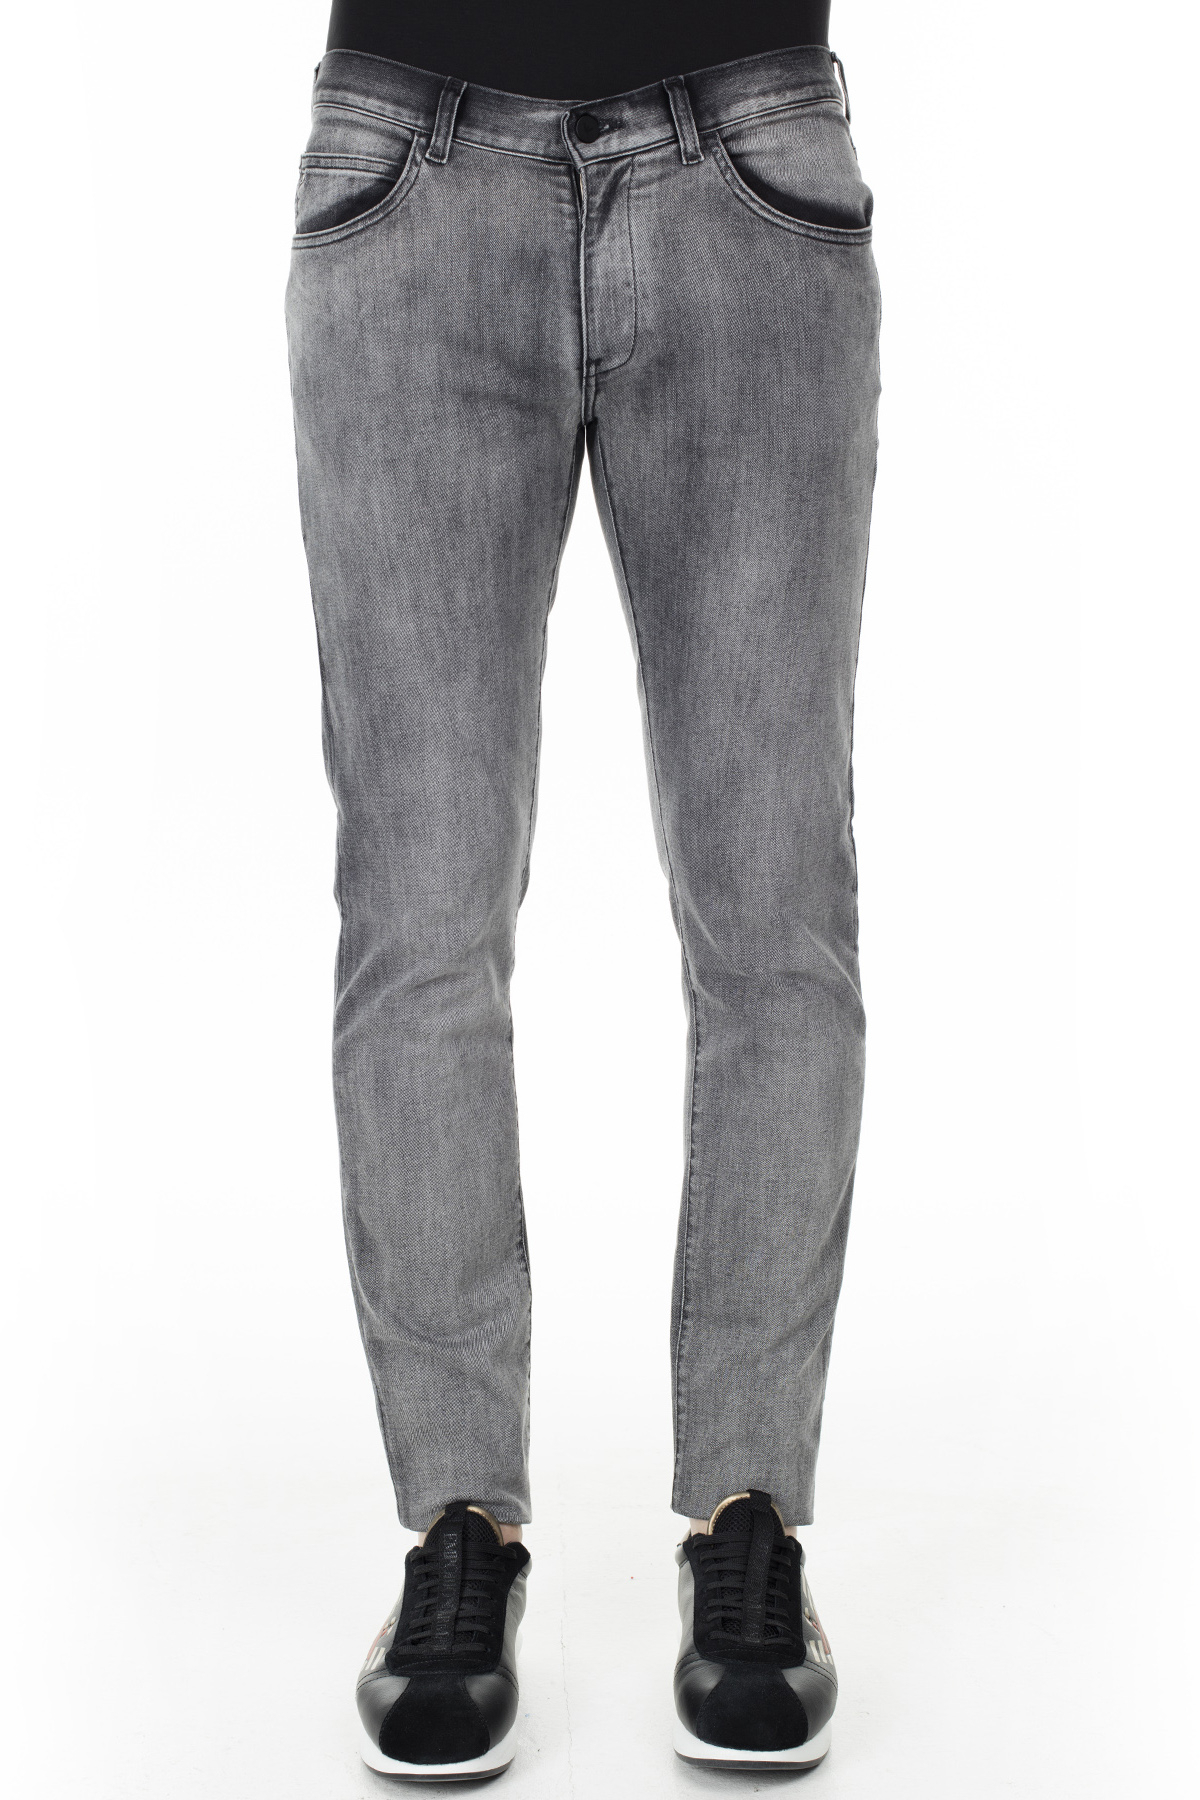 Emporio Armani J10 Jeans Erkek Kot Pantolon S 6G1J10 1D6MZ 0644 GRİ